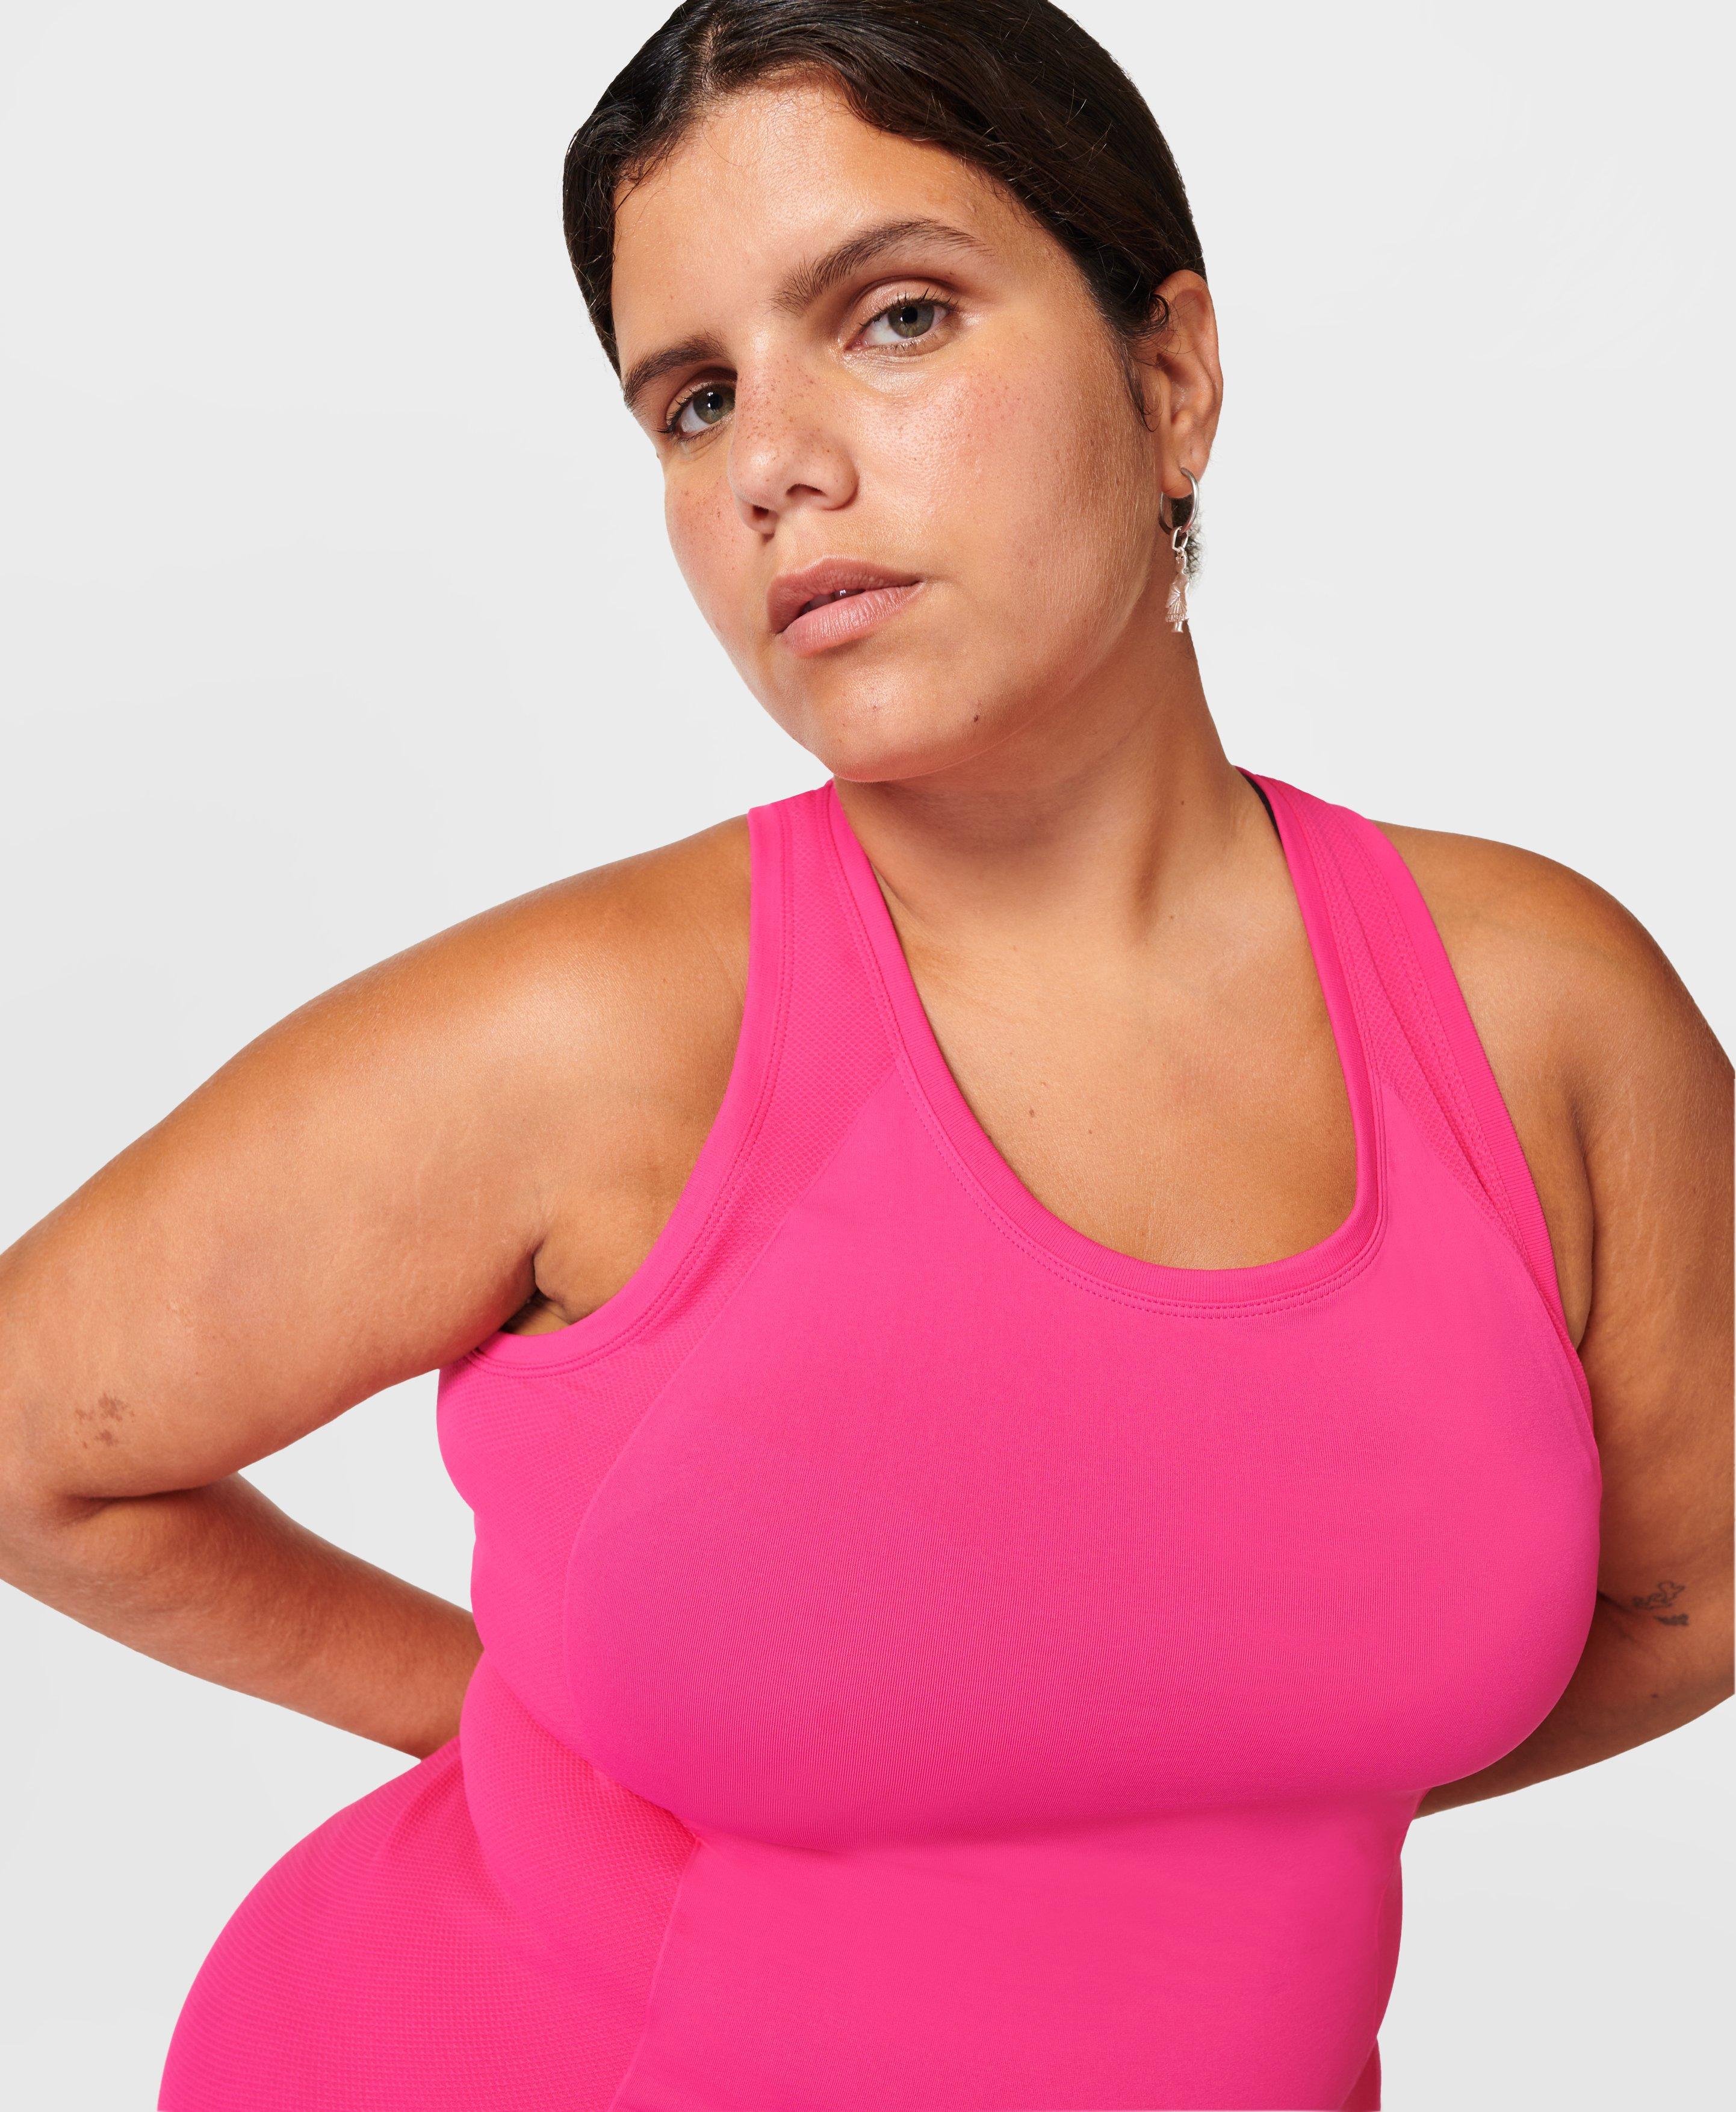 Tangerine Activewear Sleeveless Purple & Pink Tank Top Muscle Shirt ~  Women's XL - $17 - From Susan